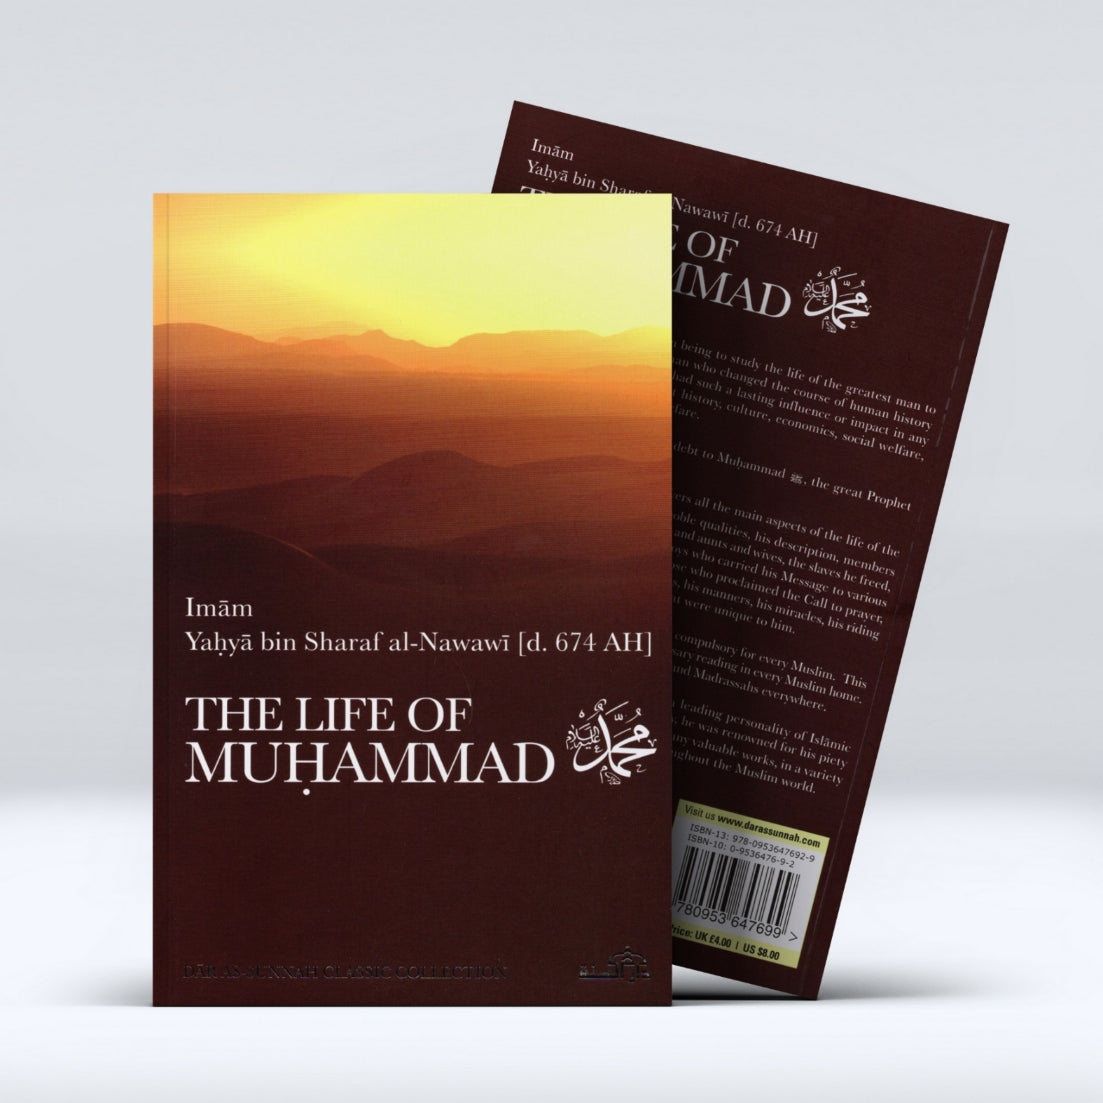 The life of Muhammad (PBUH)